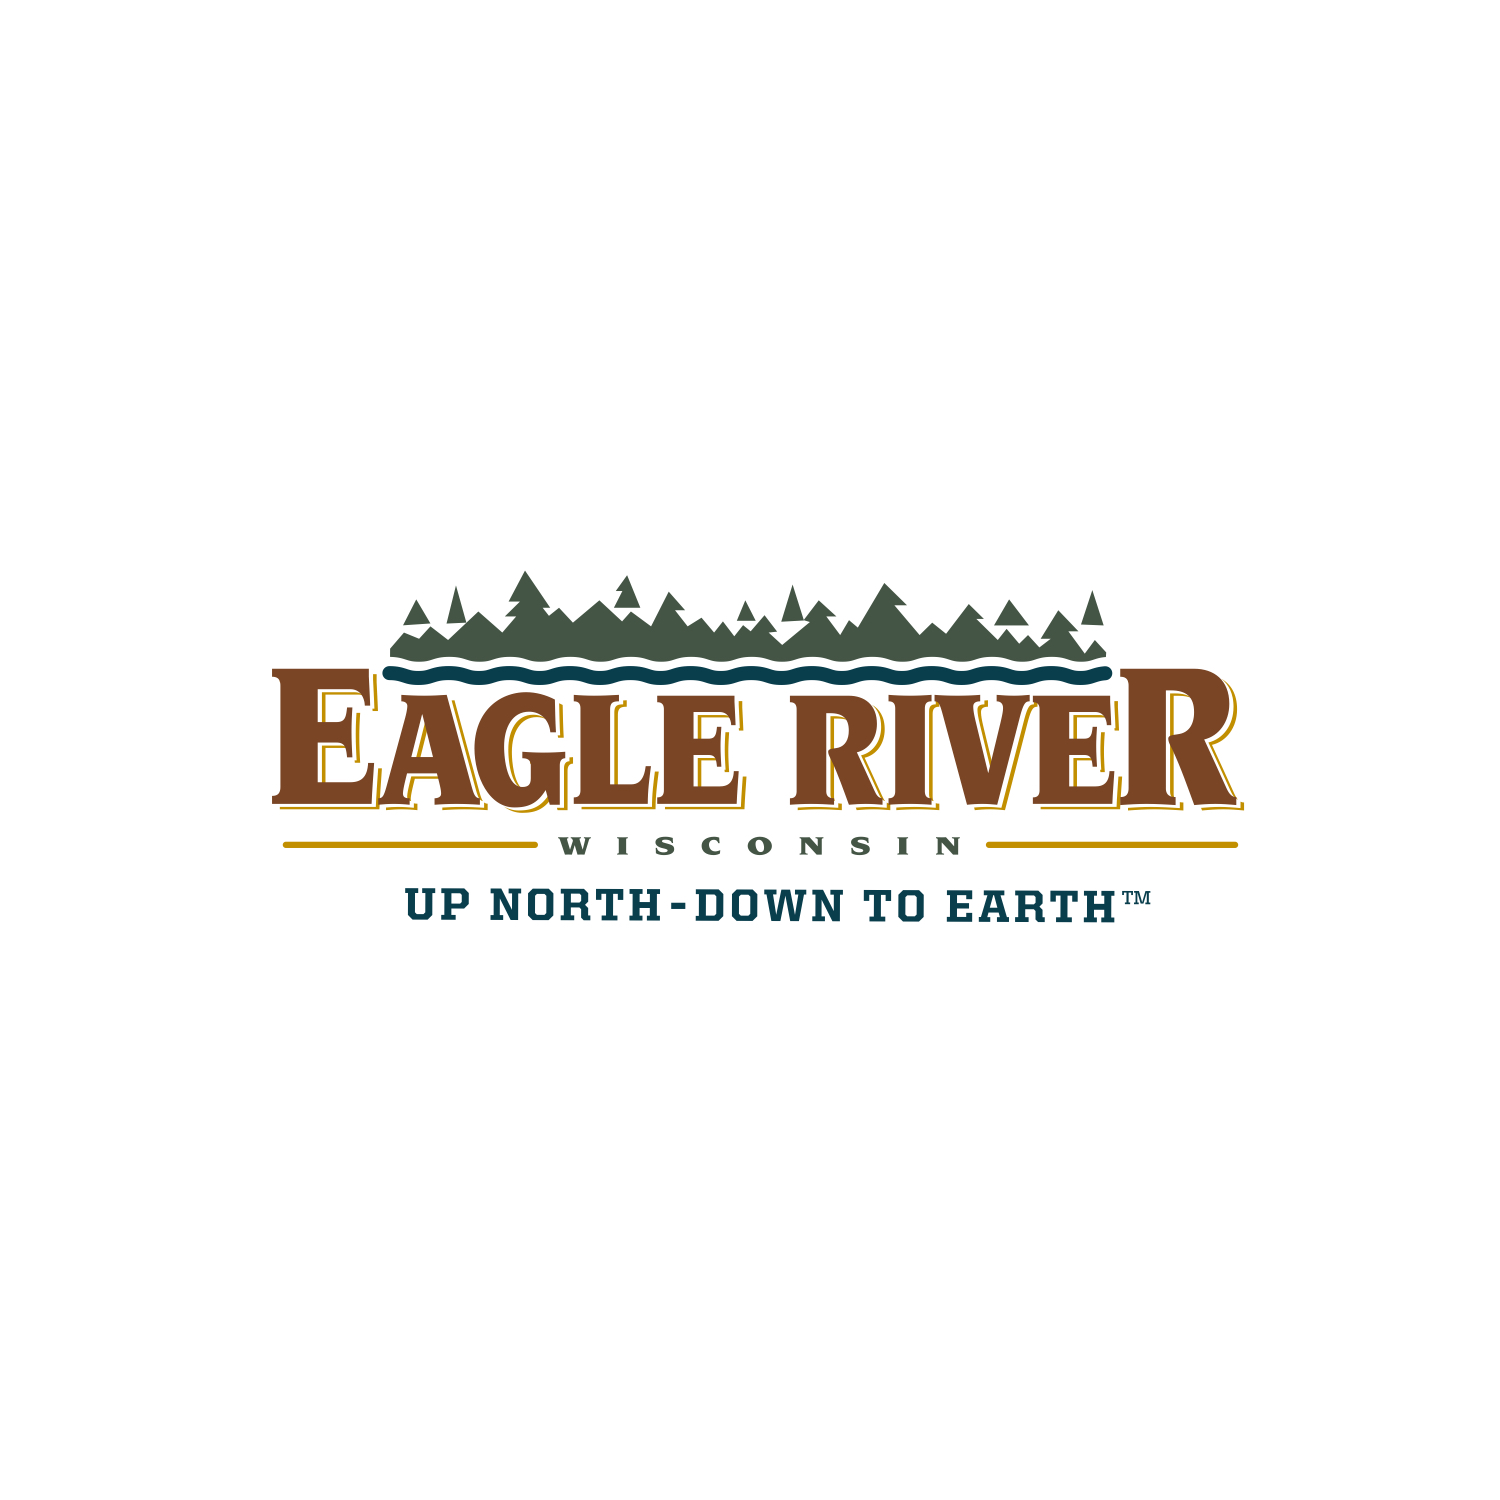 Eagle River logo